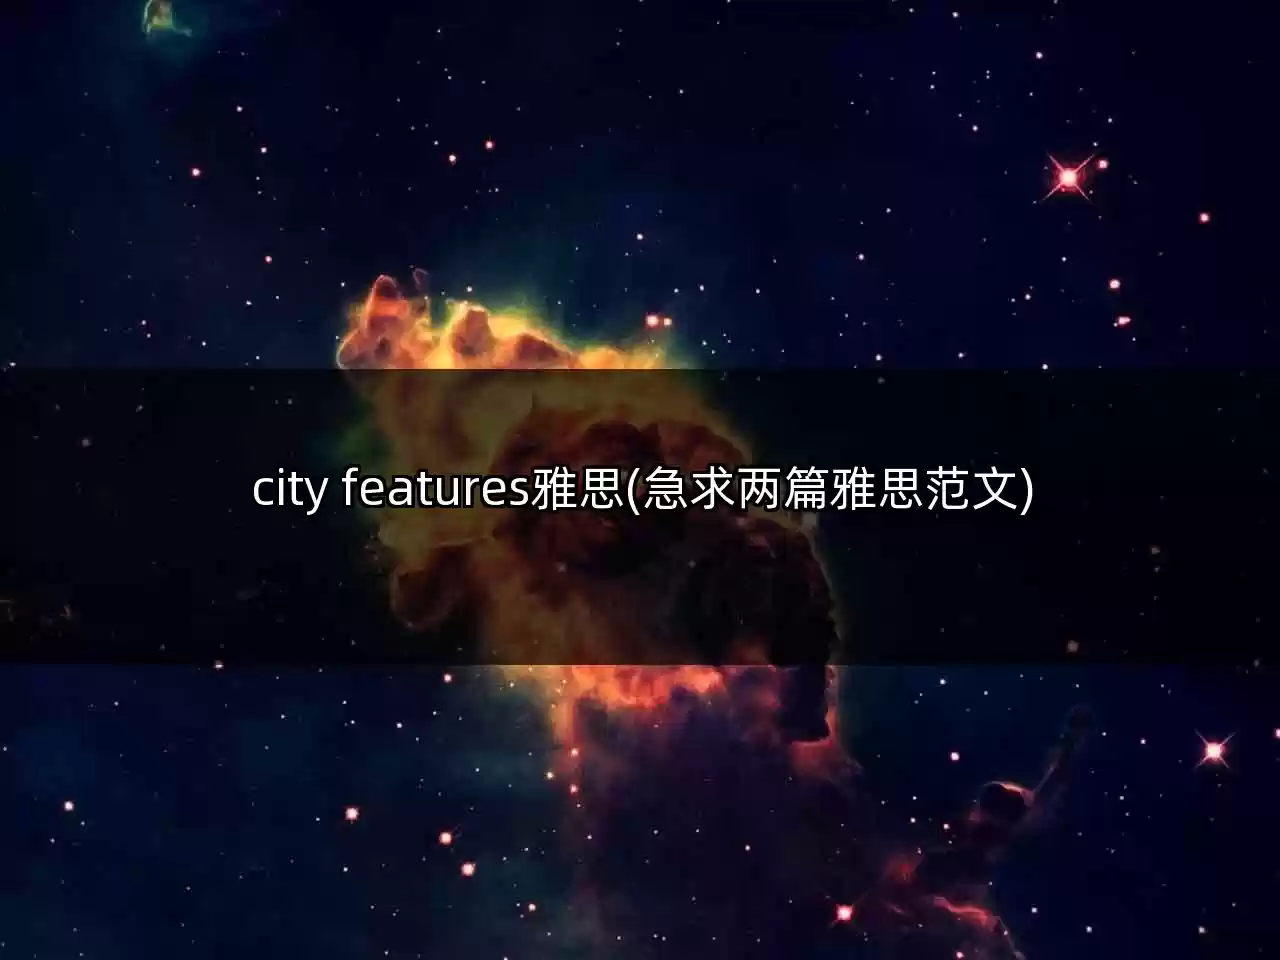 city features雅思(急求两篇雅思范文)